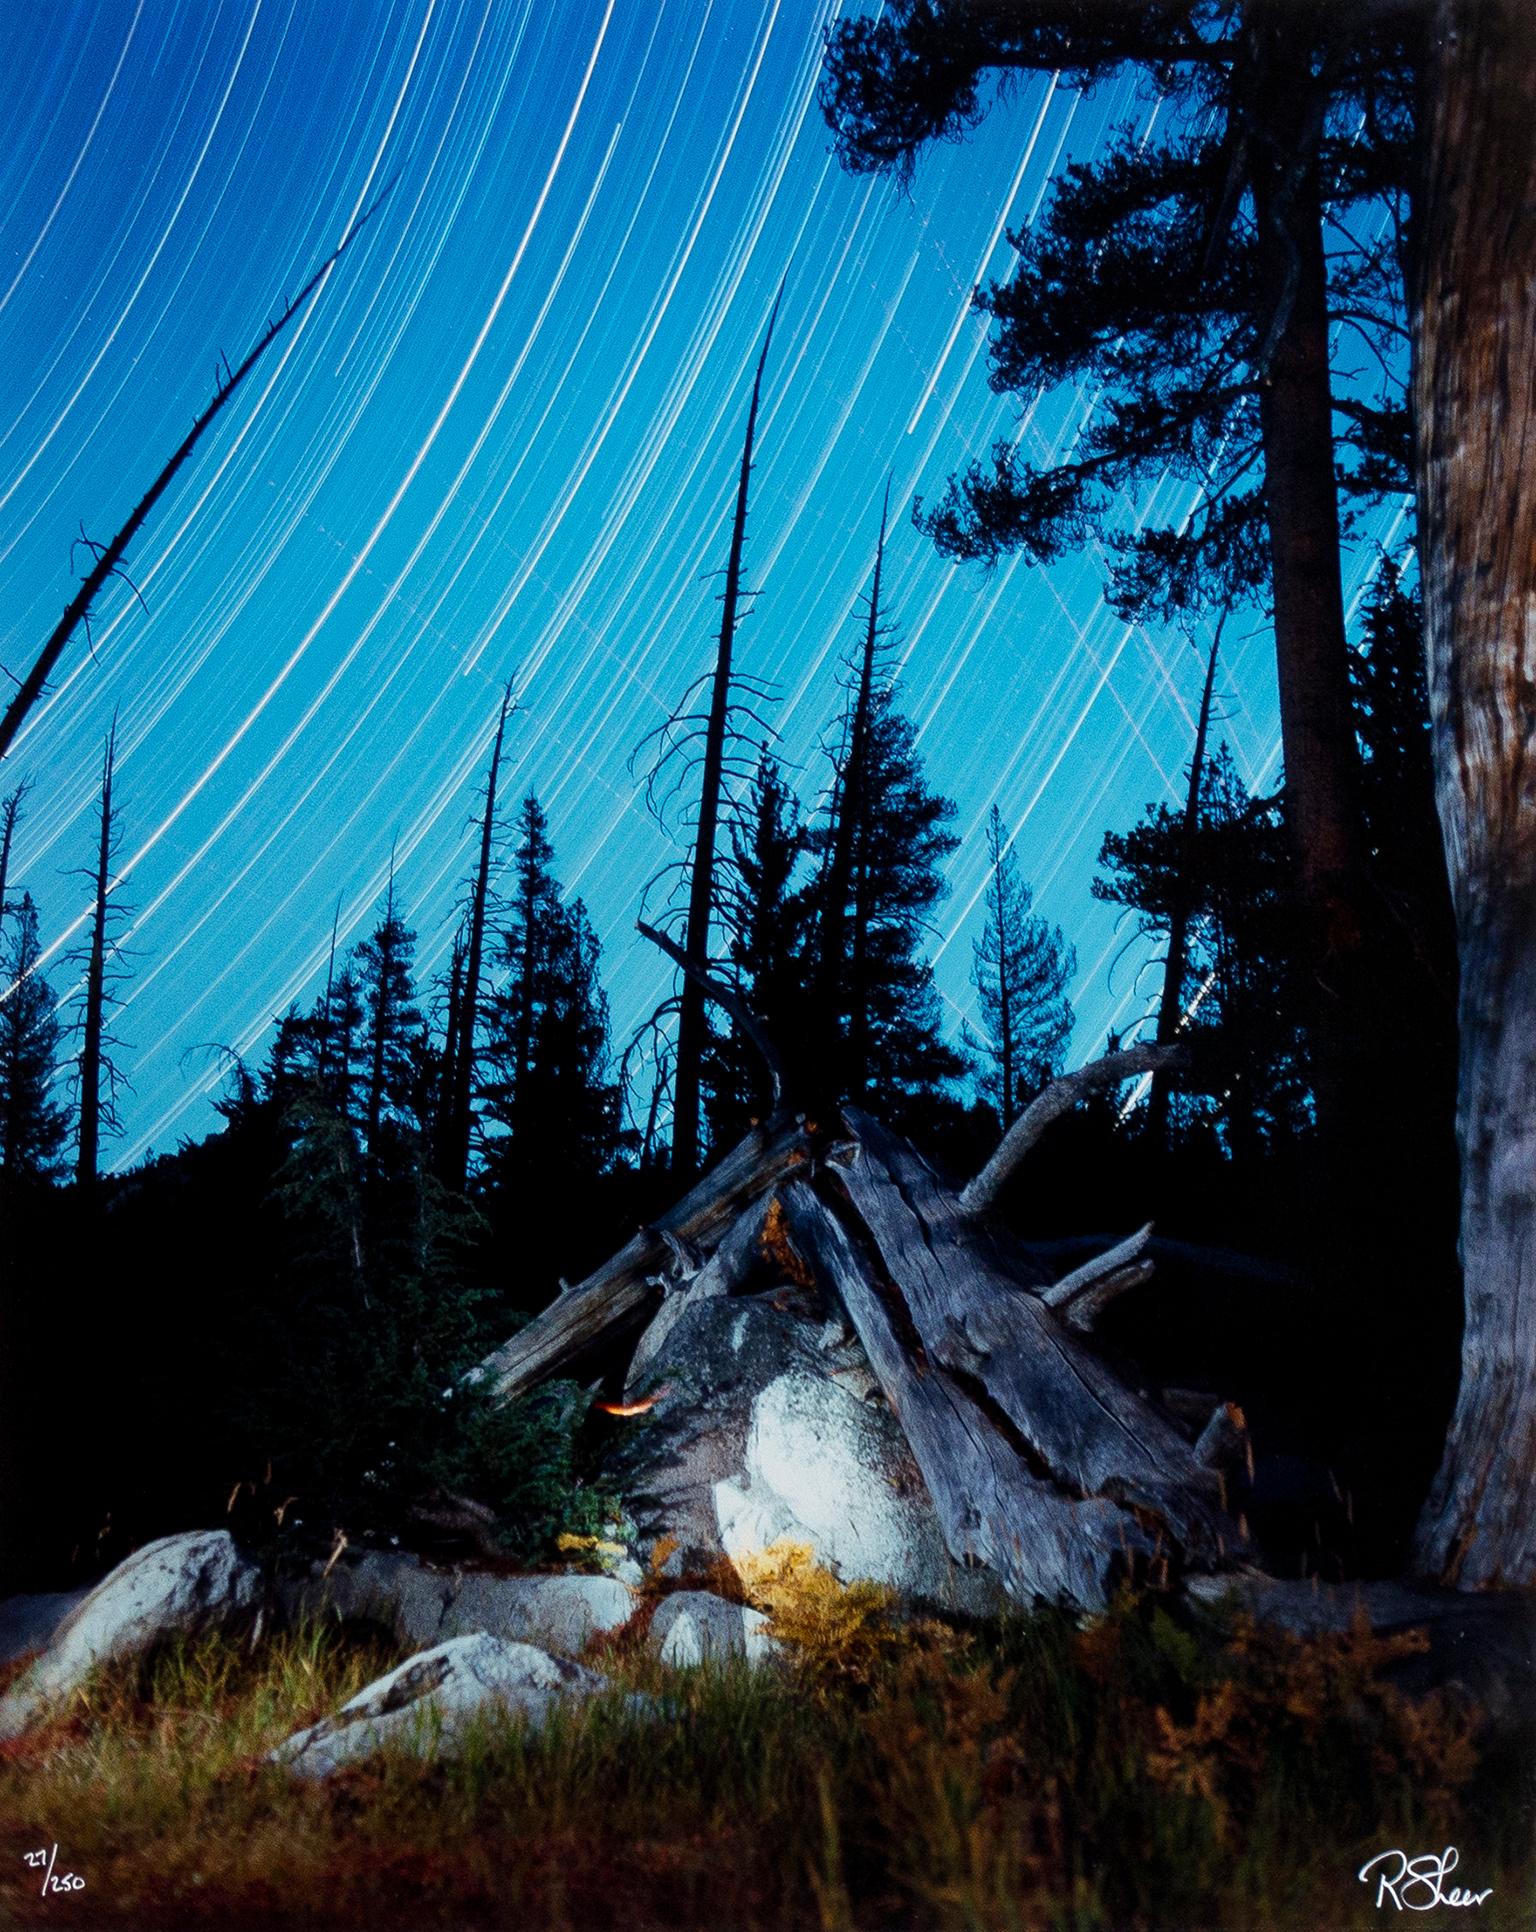 Robert Kawika Sheer Landscape Photograph - "The Spirit of John Muir with Start Trails, Yosemite, " Photograph by R.K. Sheer